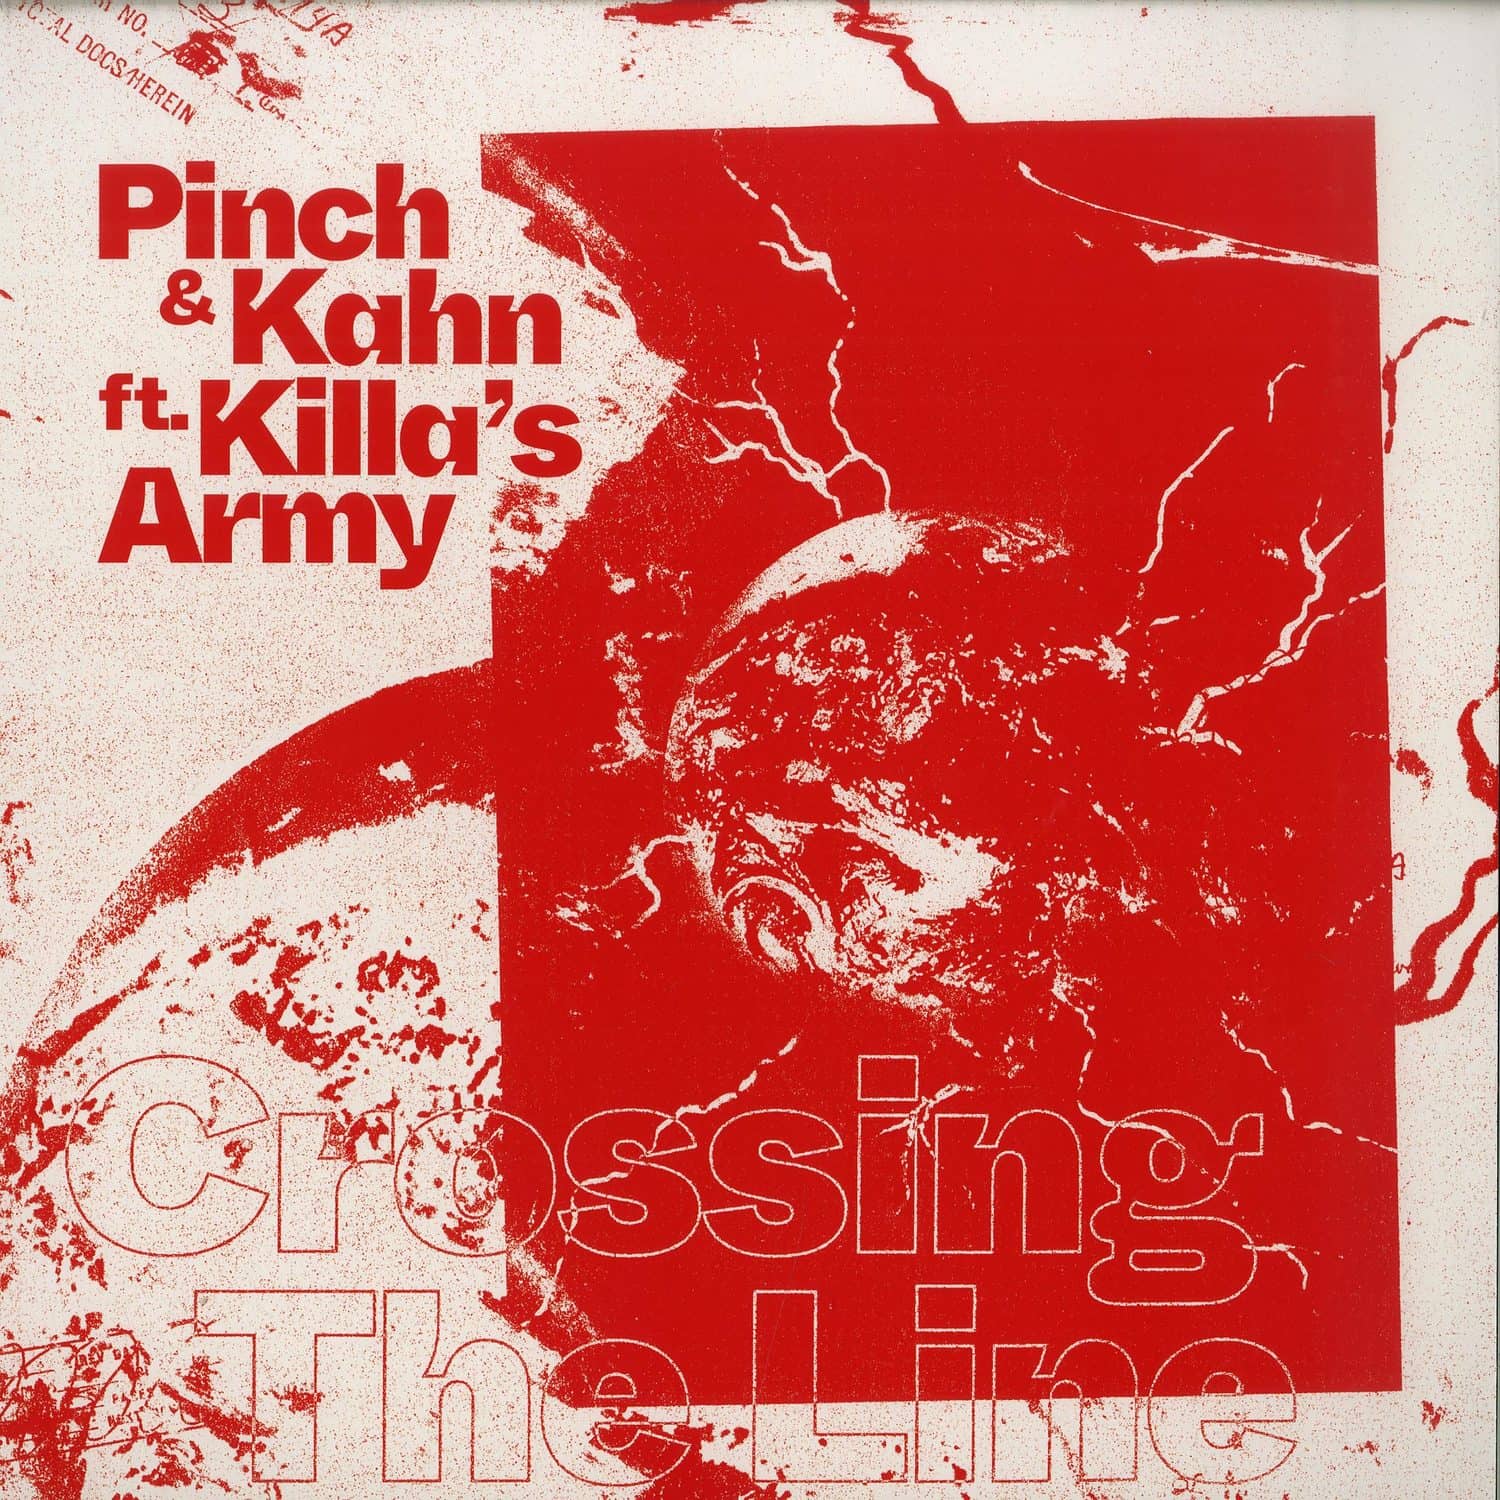 Pinch & Kahn Ft. Killas Army - CROSSING THE LINE